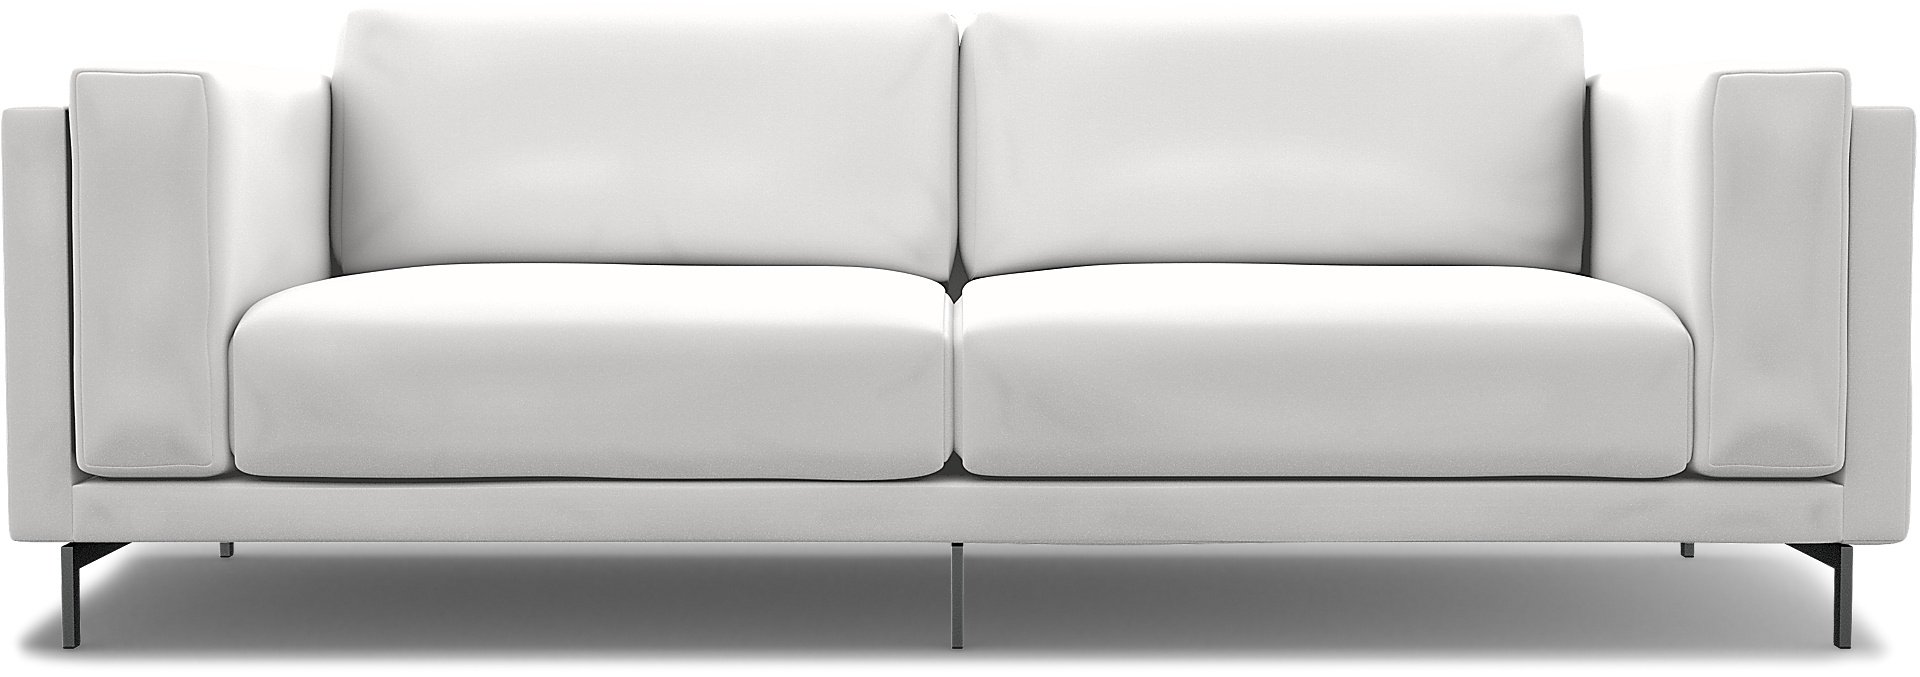 IKEA - Nockeby 3 Seater Sofa Cover, Absolute White, Cotton - Bemz